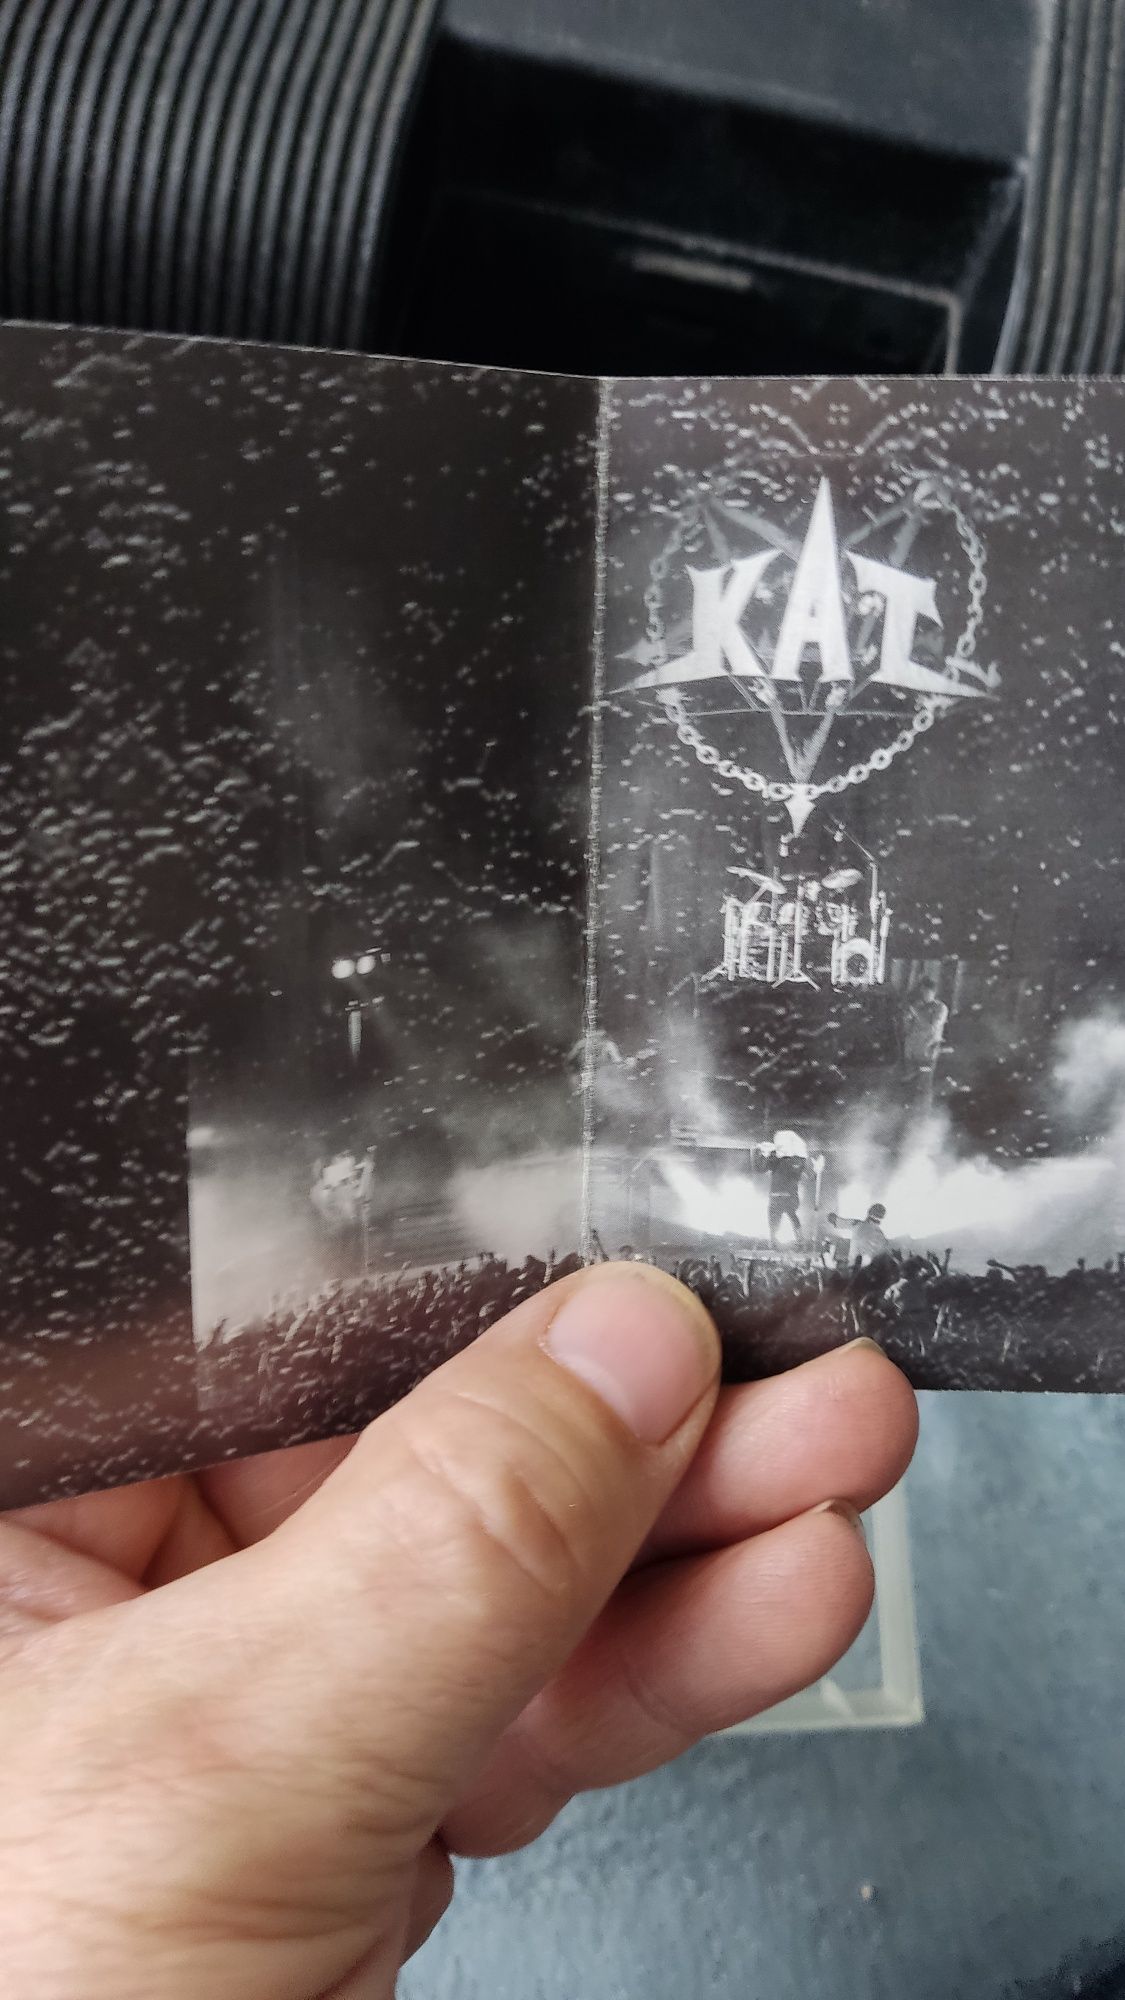 Kat 666 kaseta audio Heavy metal